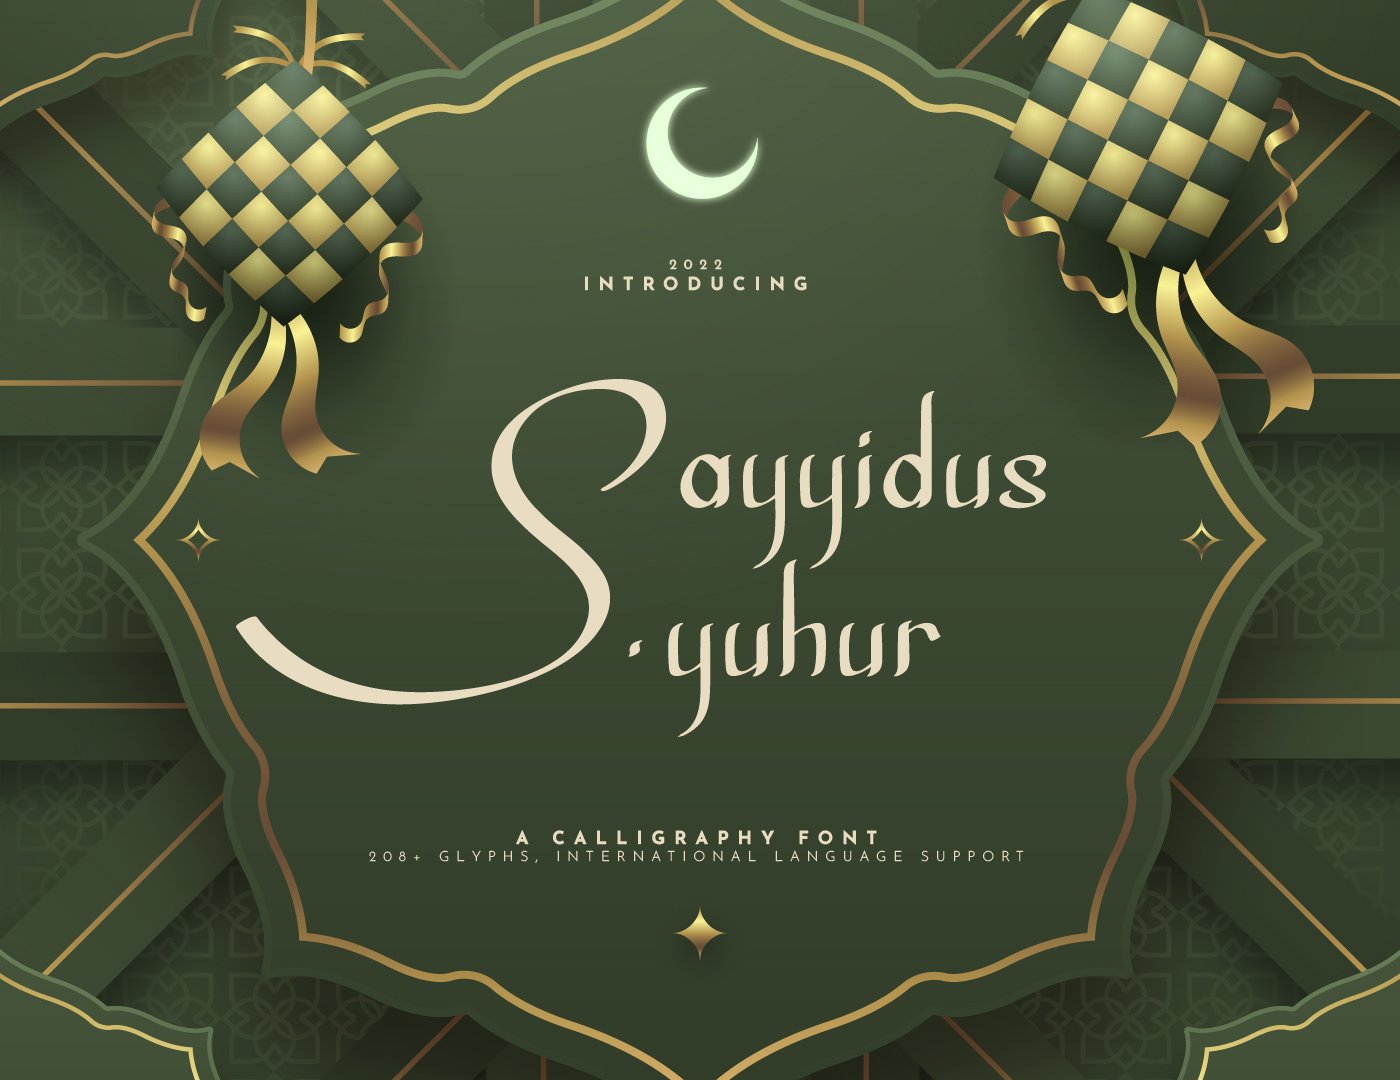 Sayyidus Syuhur Calligraphy cover image.